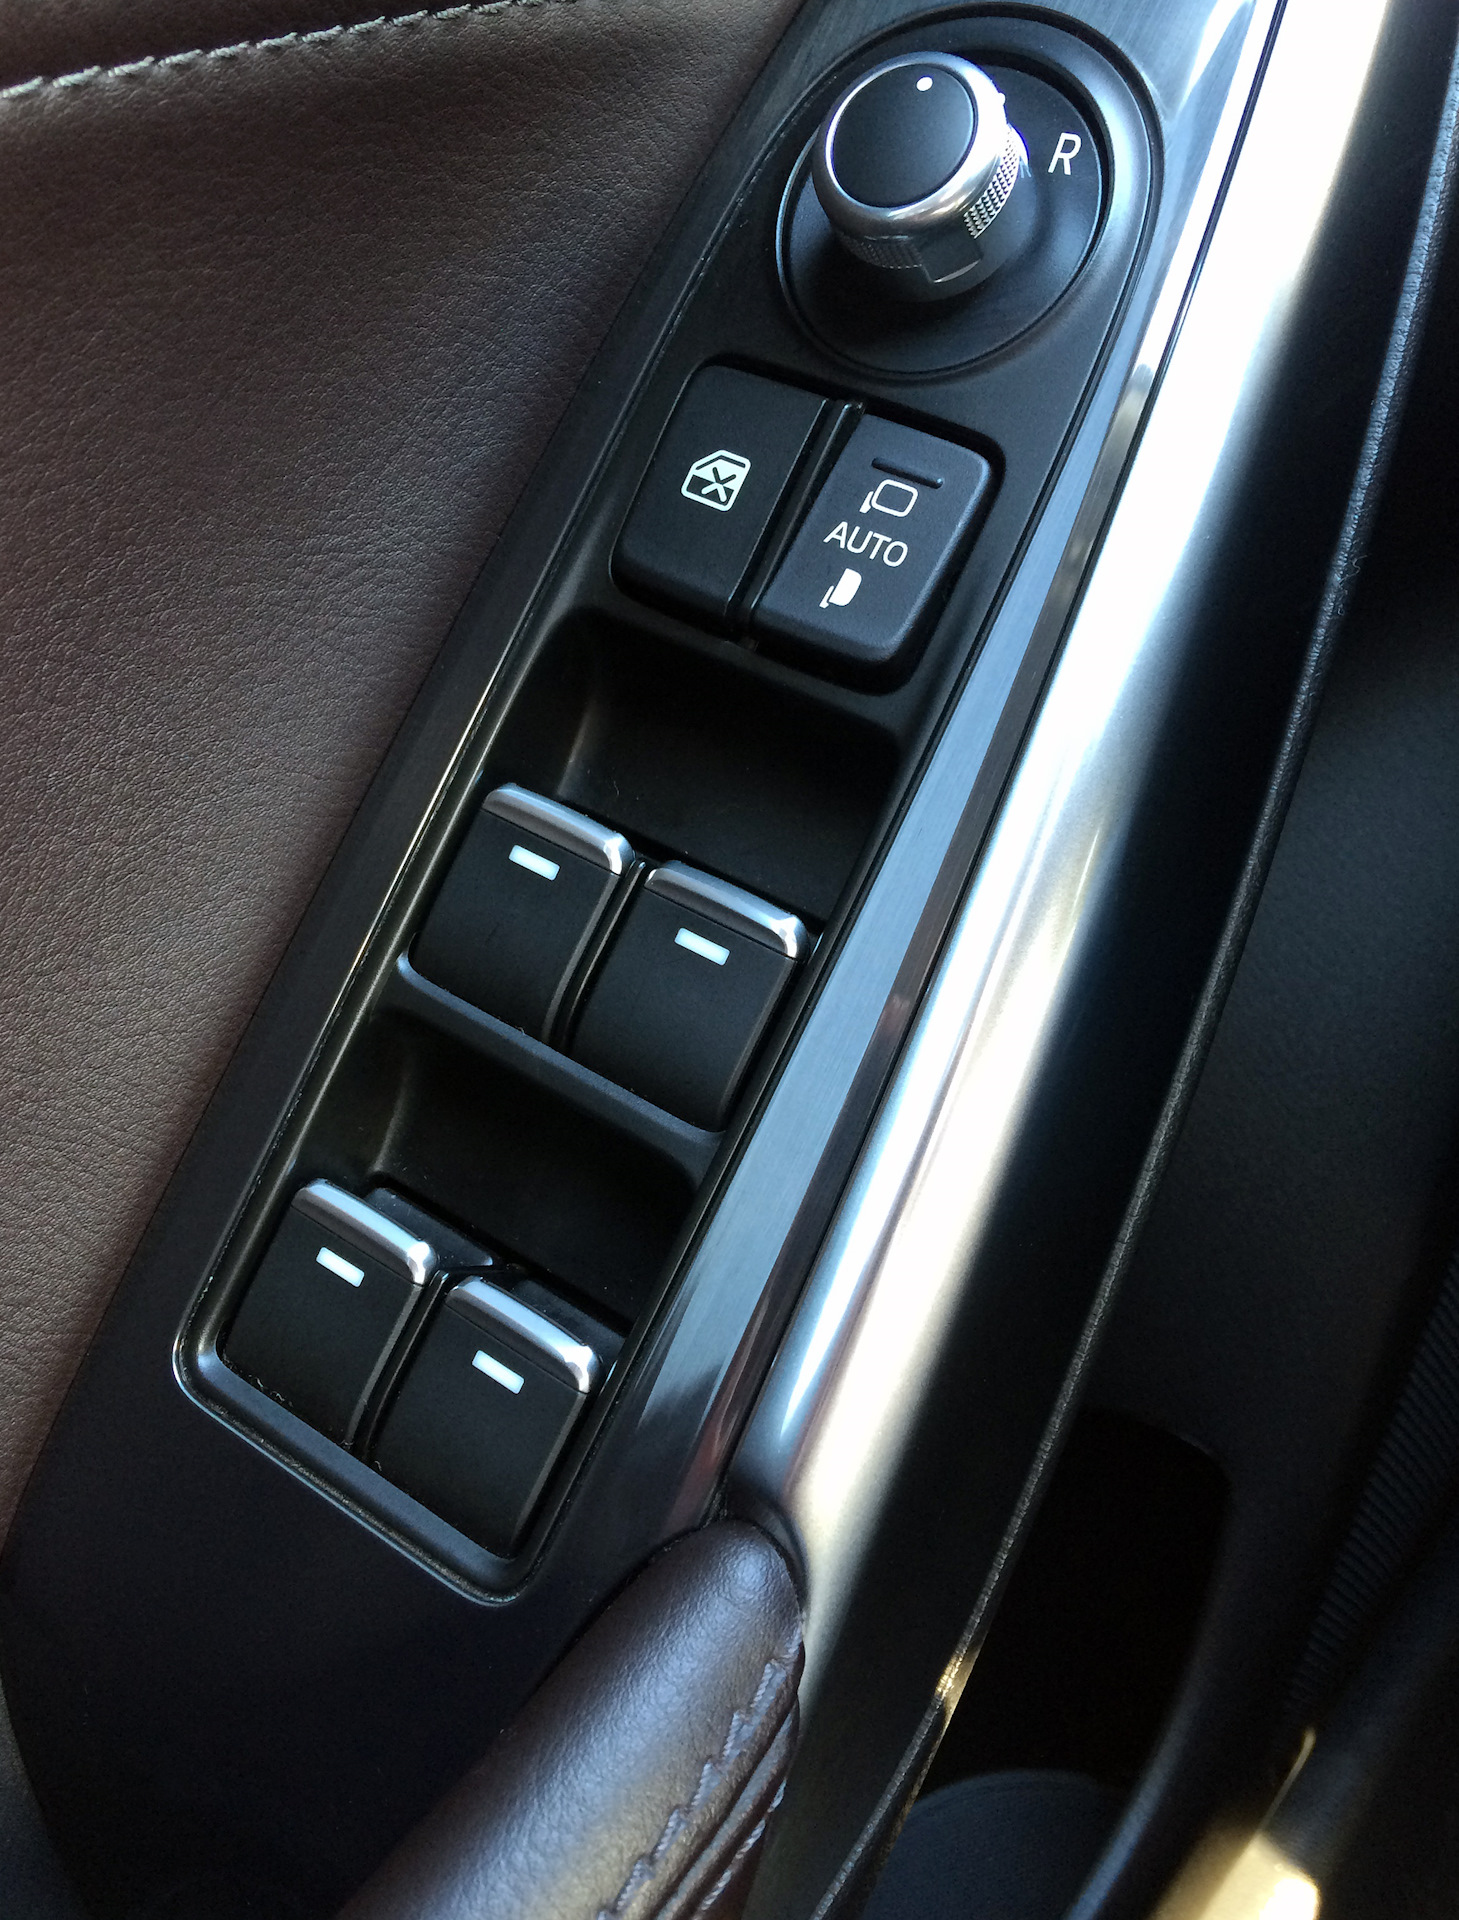 Складывание зеркал мазда сх 5. Кнопка складывания зеркал Мазда 6. Кнопки на водительской двери Мазда 6. Кнопки Мазда сх5. Кнопка Set Mazda CX-5.